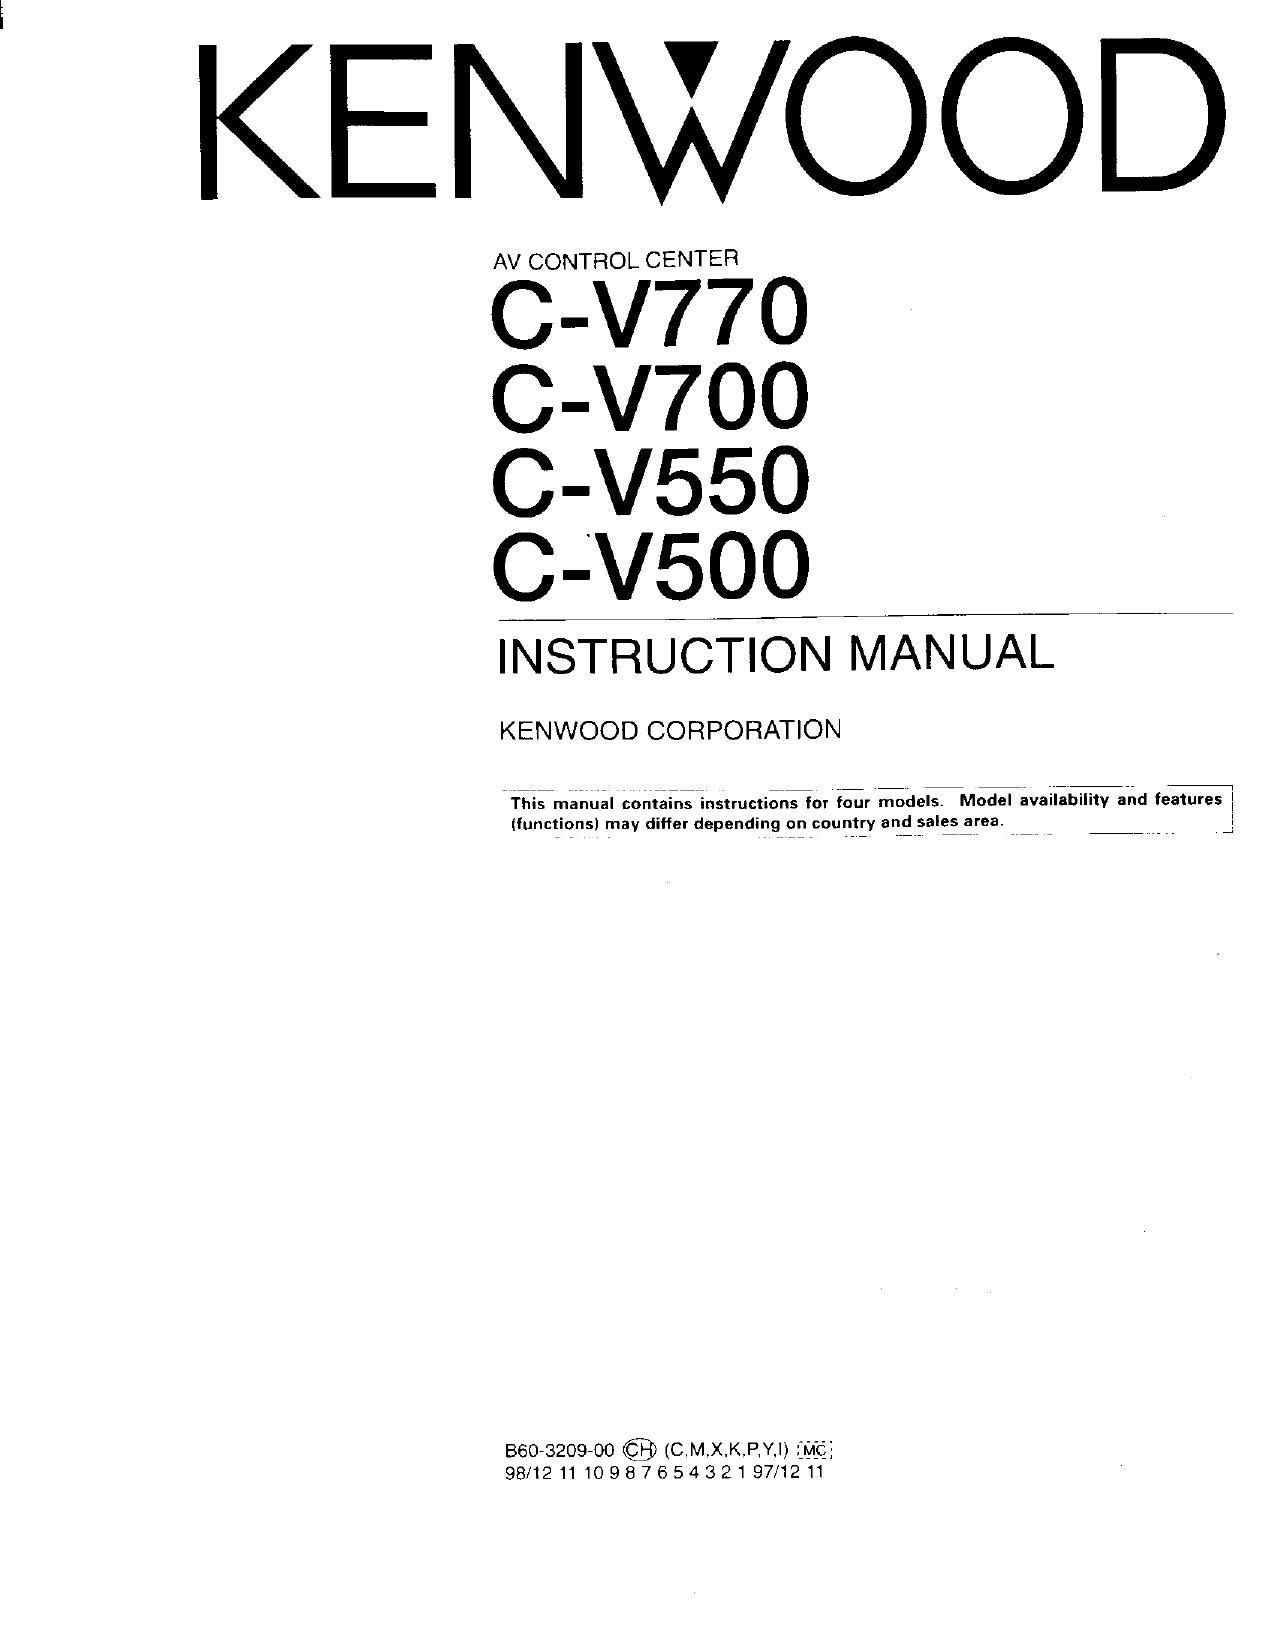 Kenwood CV 550 Owners Manual